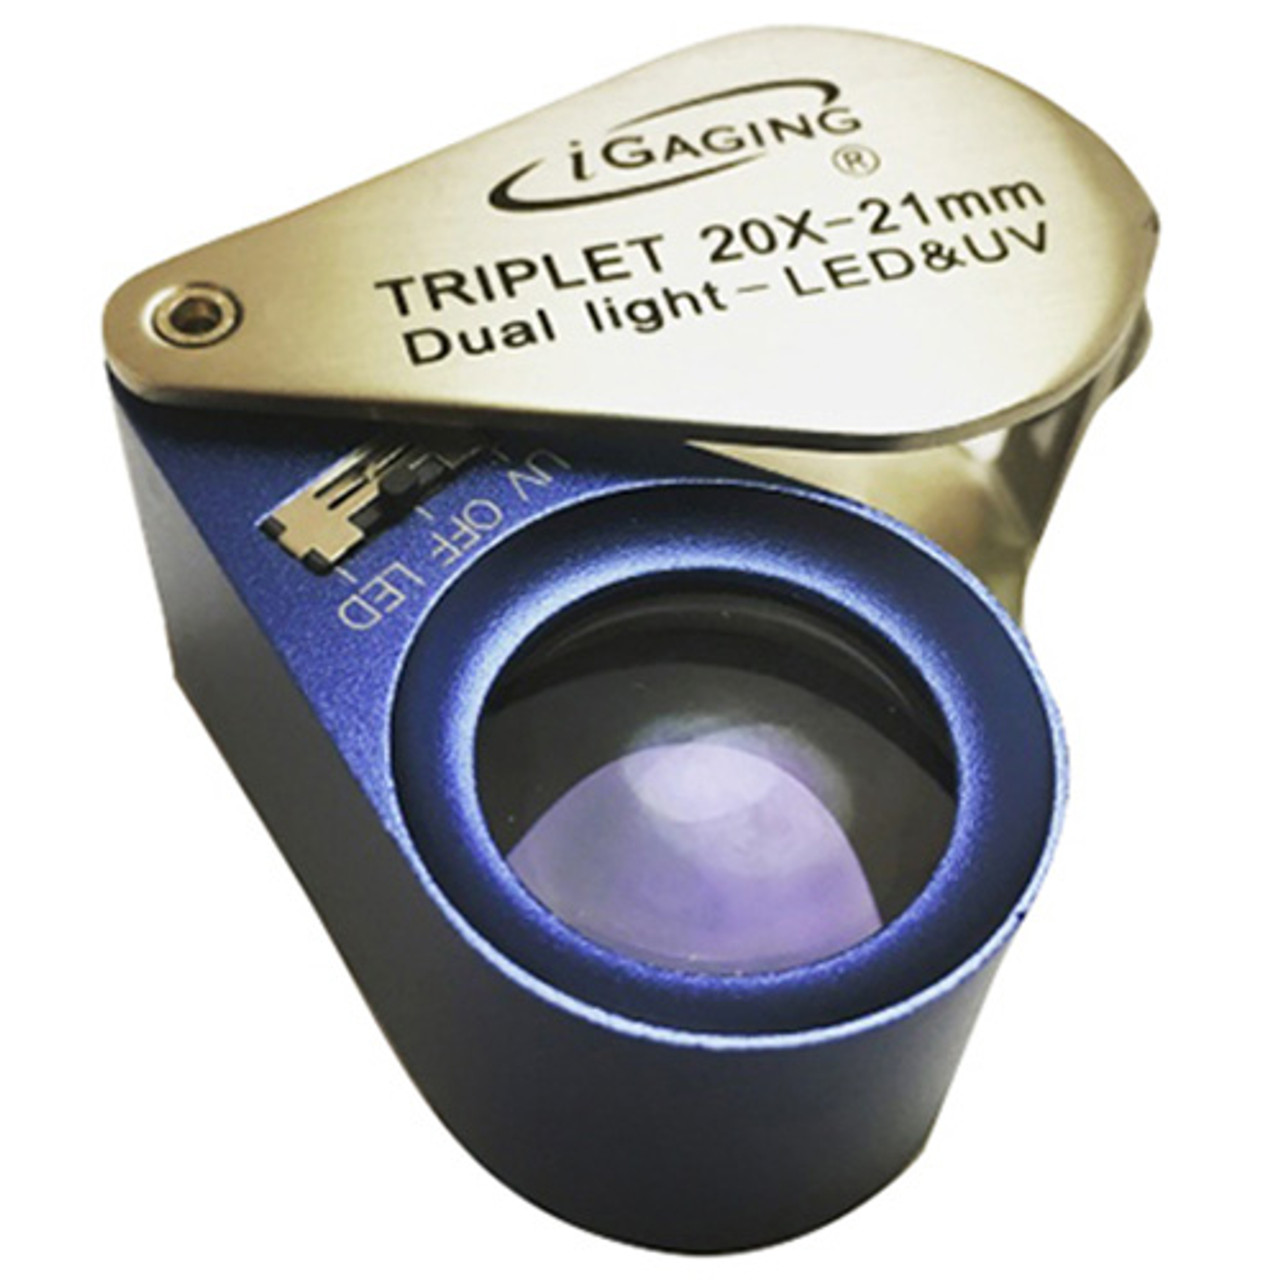 iGaging 10X LED & UV Optical Loupe - 36-LUV10 - Penn Tool Co., Inc